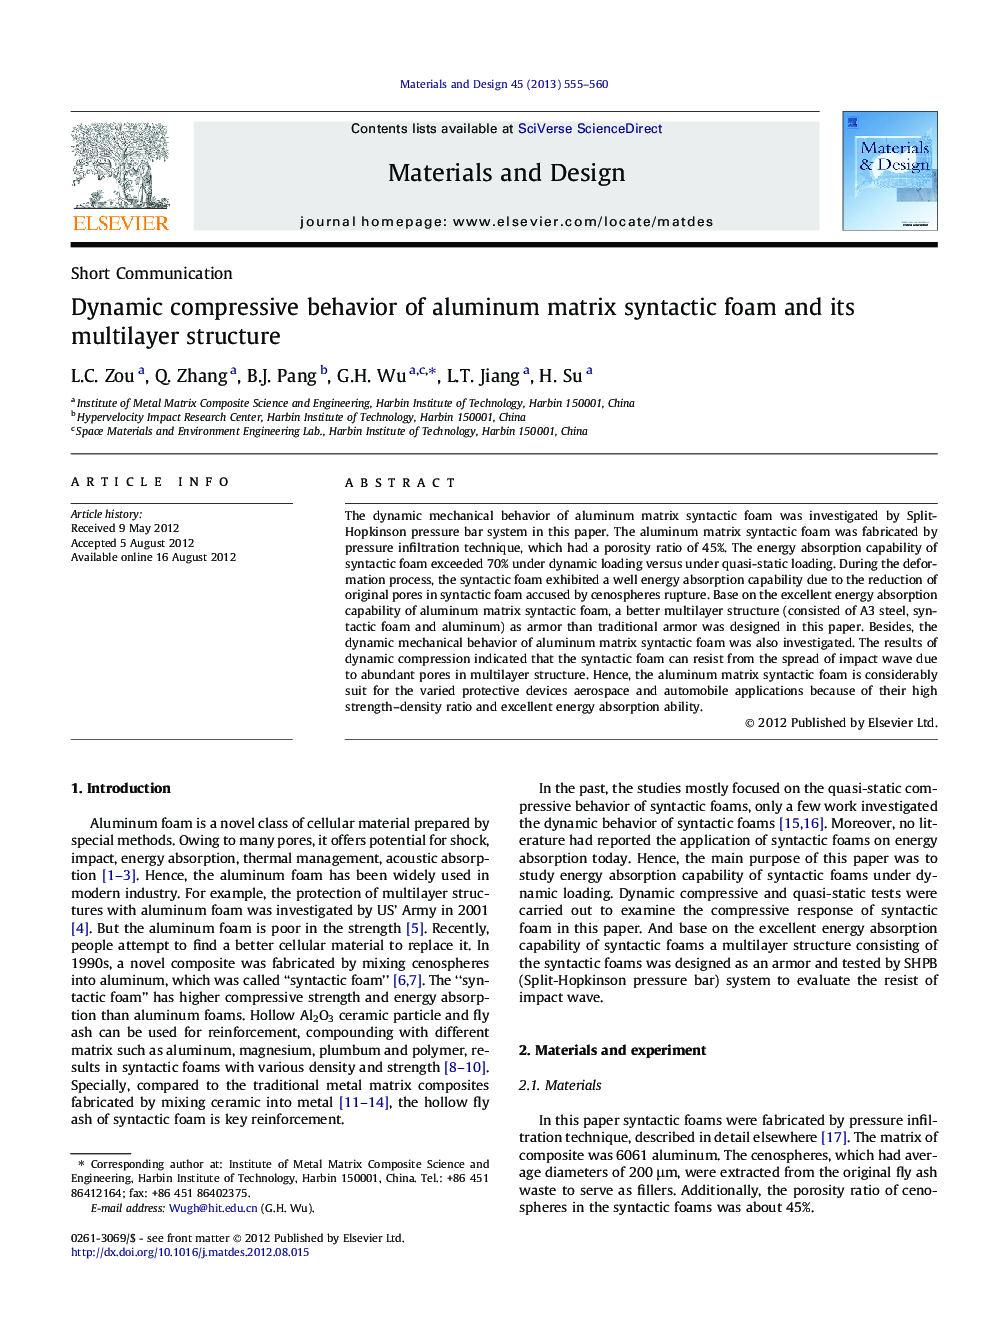 Dynamic compressive behavior of aluminum matrix syntactic foam and its multilayer structure